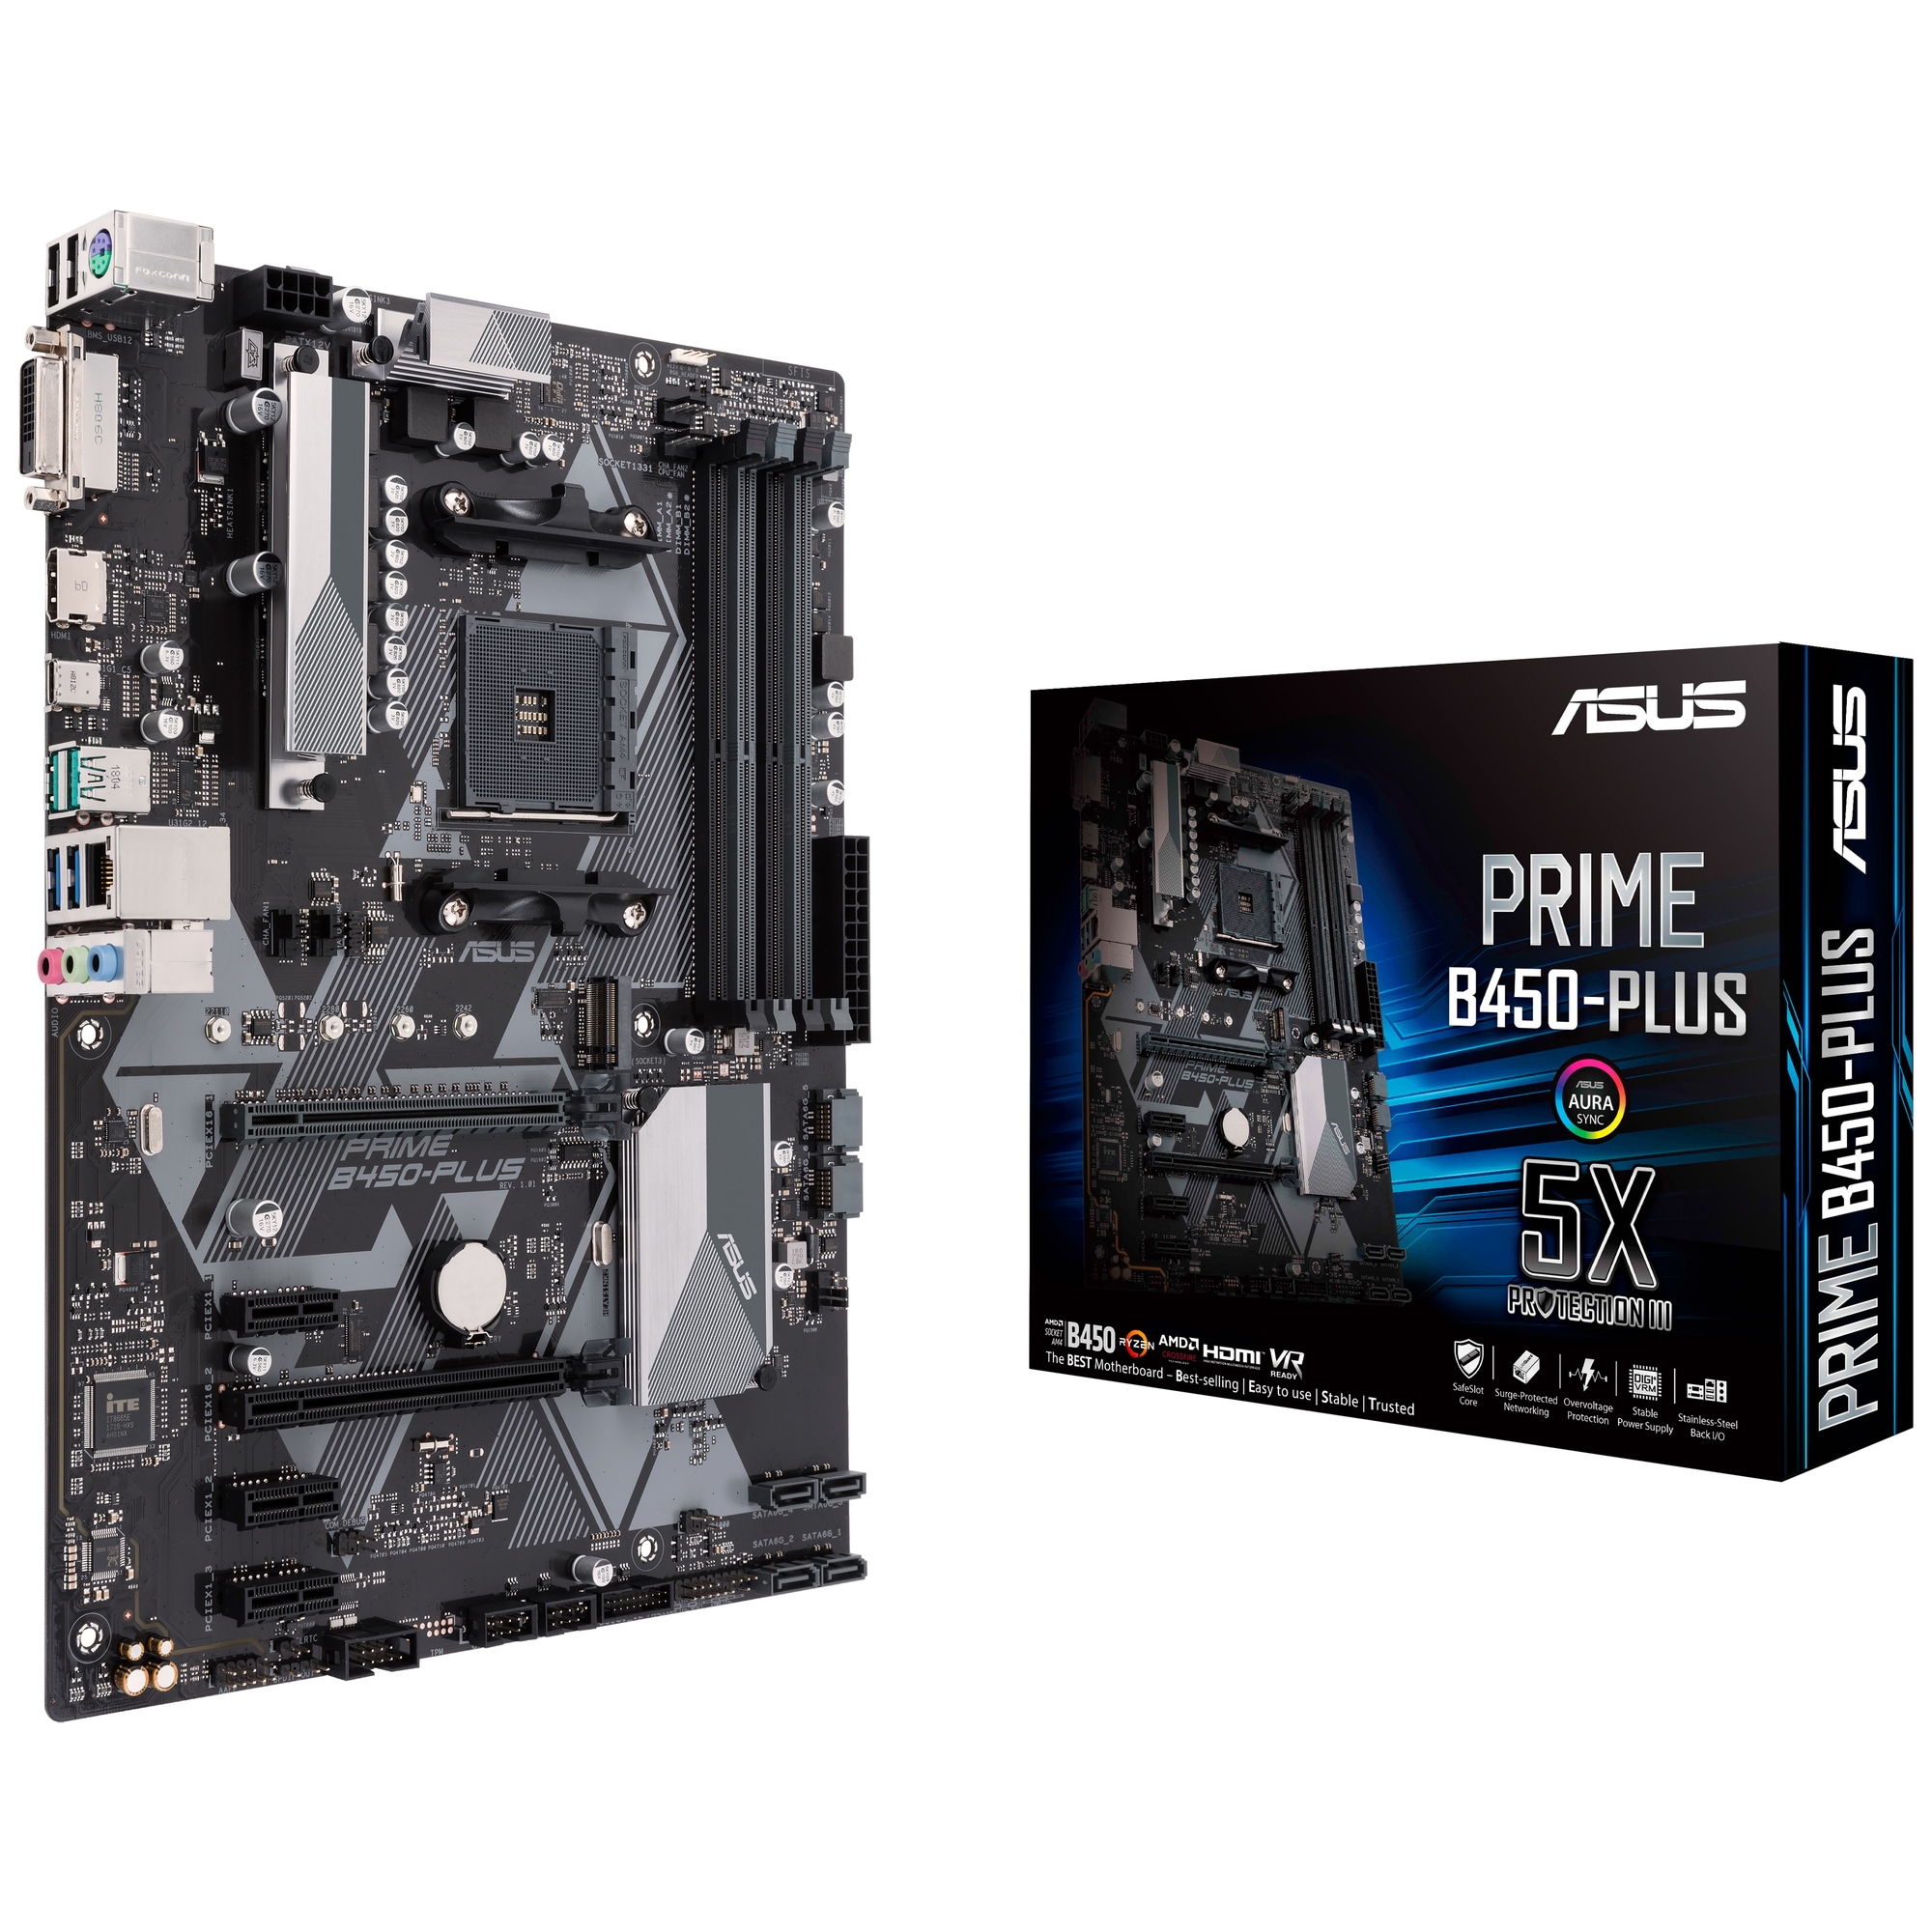 Asus Prime B450-Plus motherboard | Elgiganten